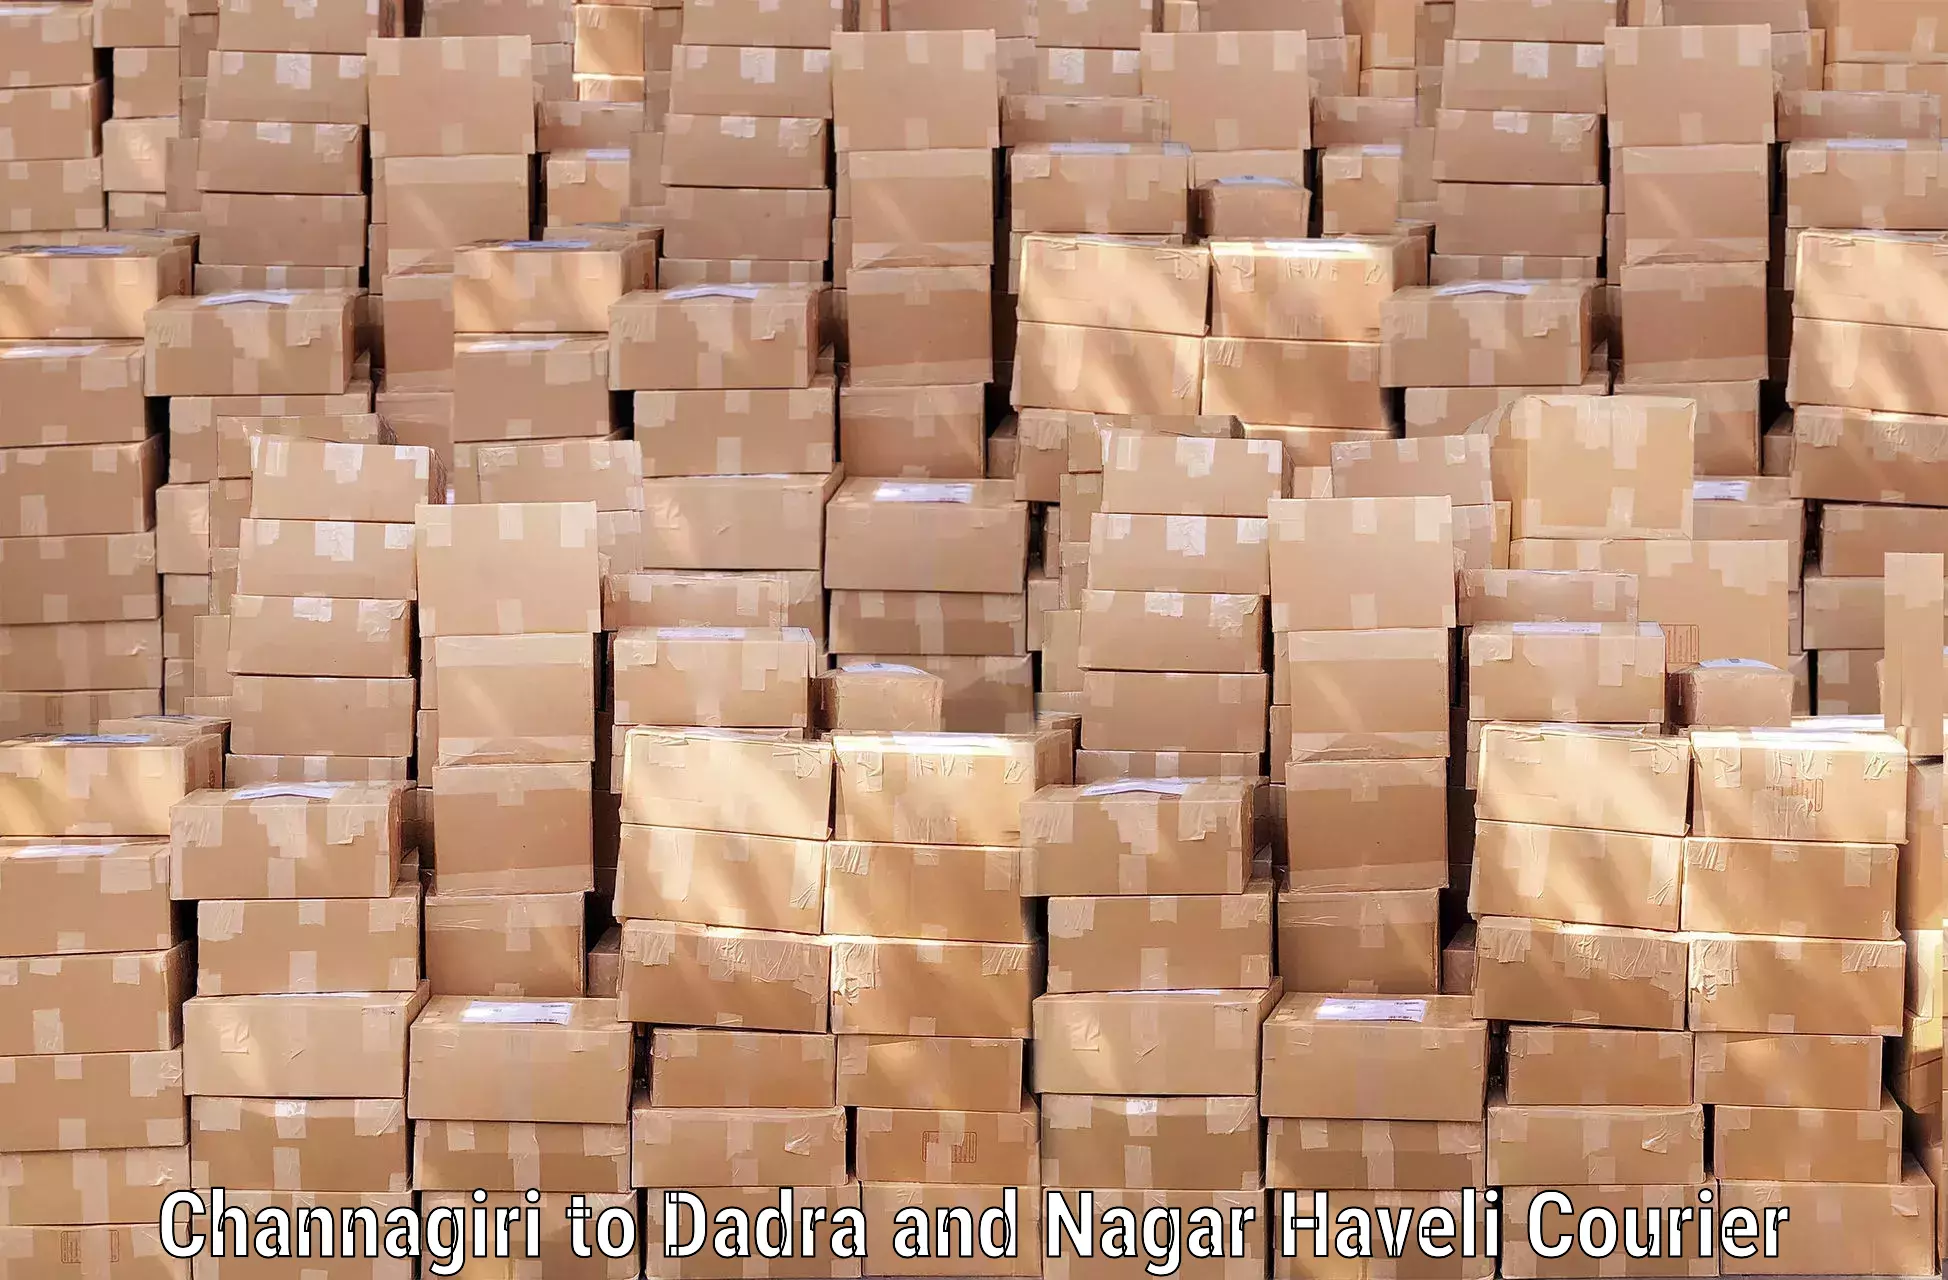 Luggage shipment specialists Channagiri to Dadra and Nagar Haveli